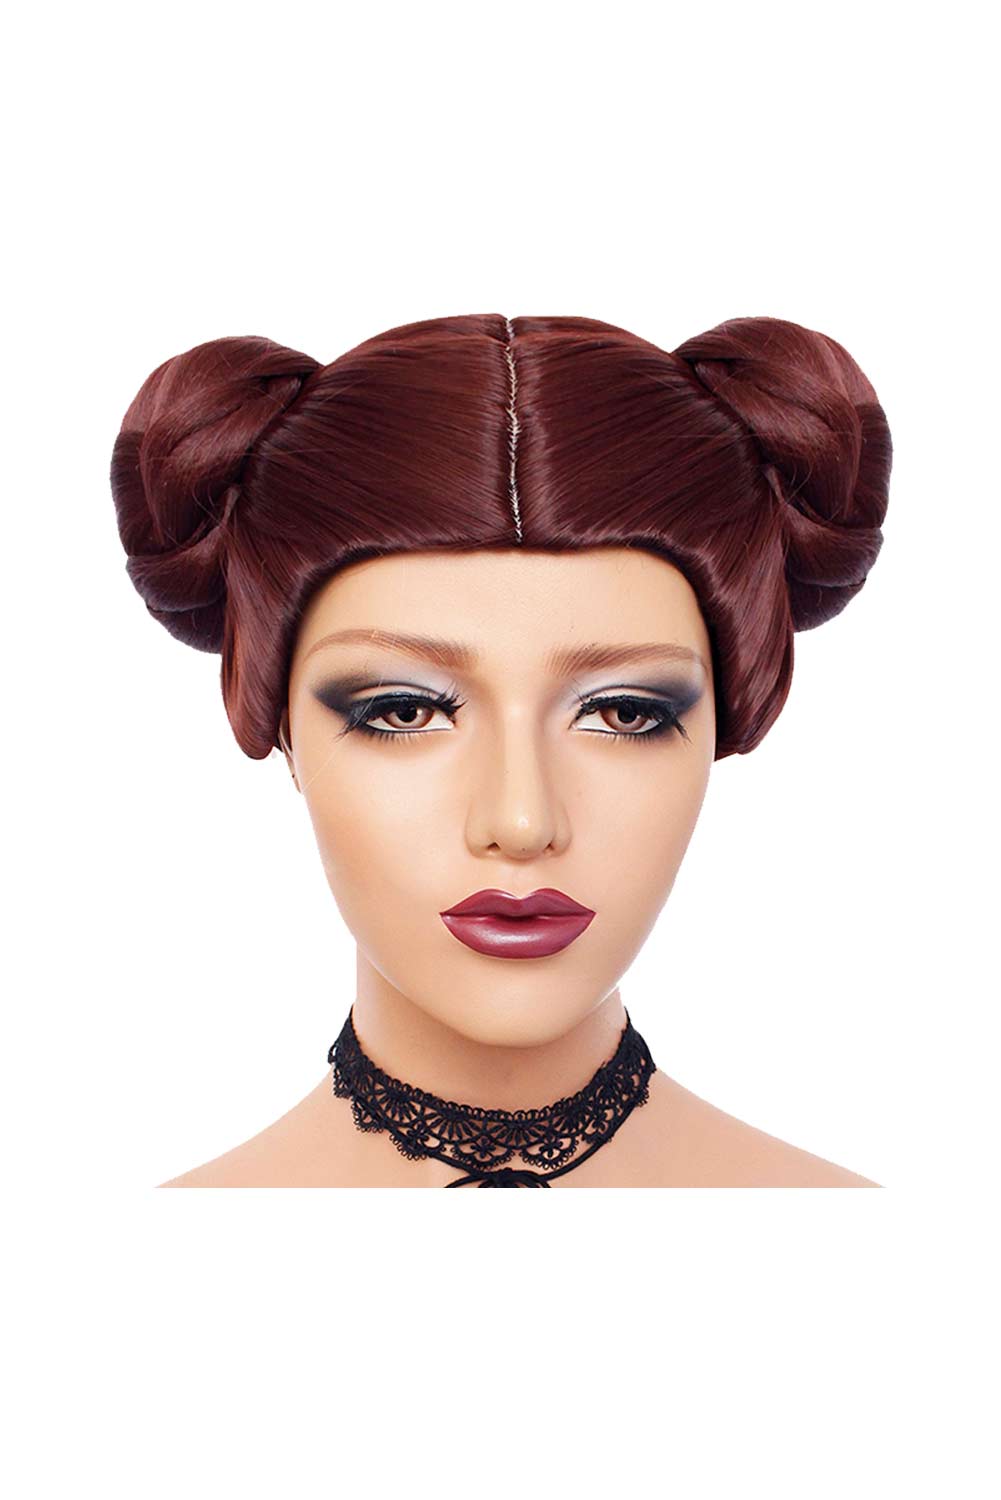 Movie Star Wars Leia Princess Kid Girls Cosplay Wig Heat Resistant Synthetic Hair Halloween Costume Accessories